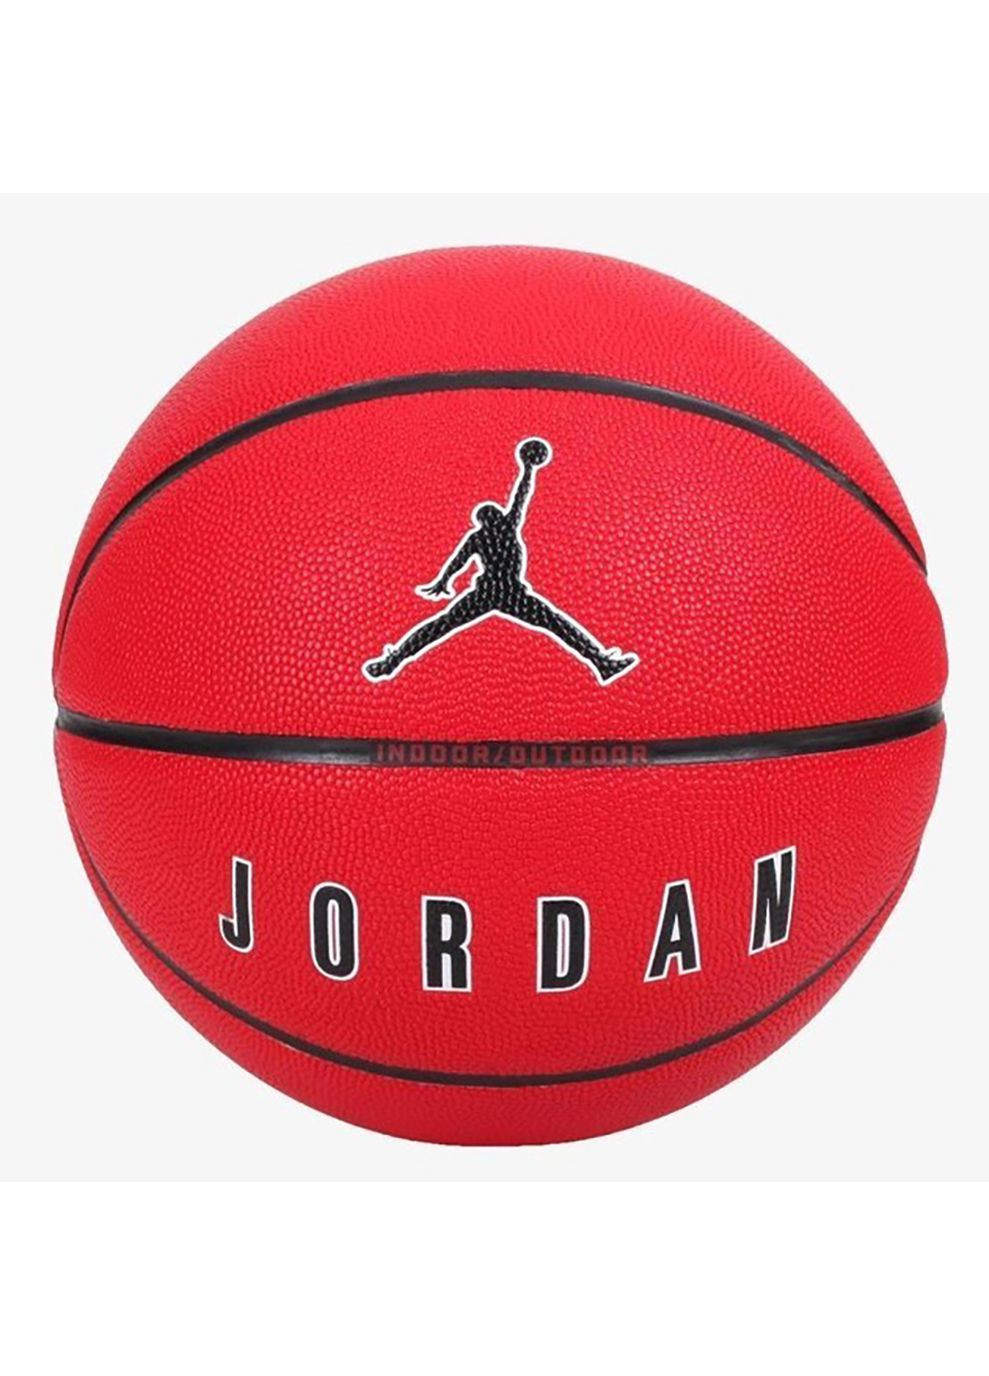 М'яч баскетбольний NIKE ULTIMATE 2.0 8P DEFLATED UNIVERSITY RED/BLACK/WHITE/BLACK size 7 Jordan (268747528)